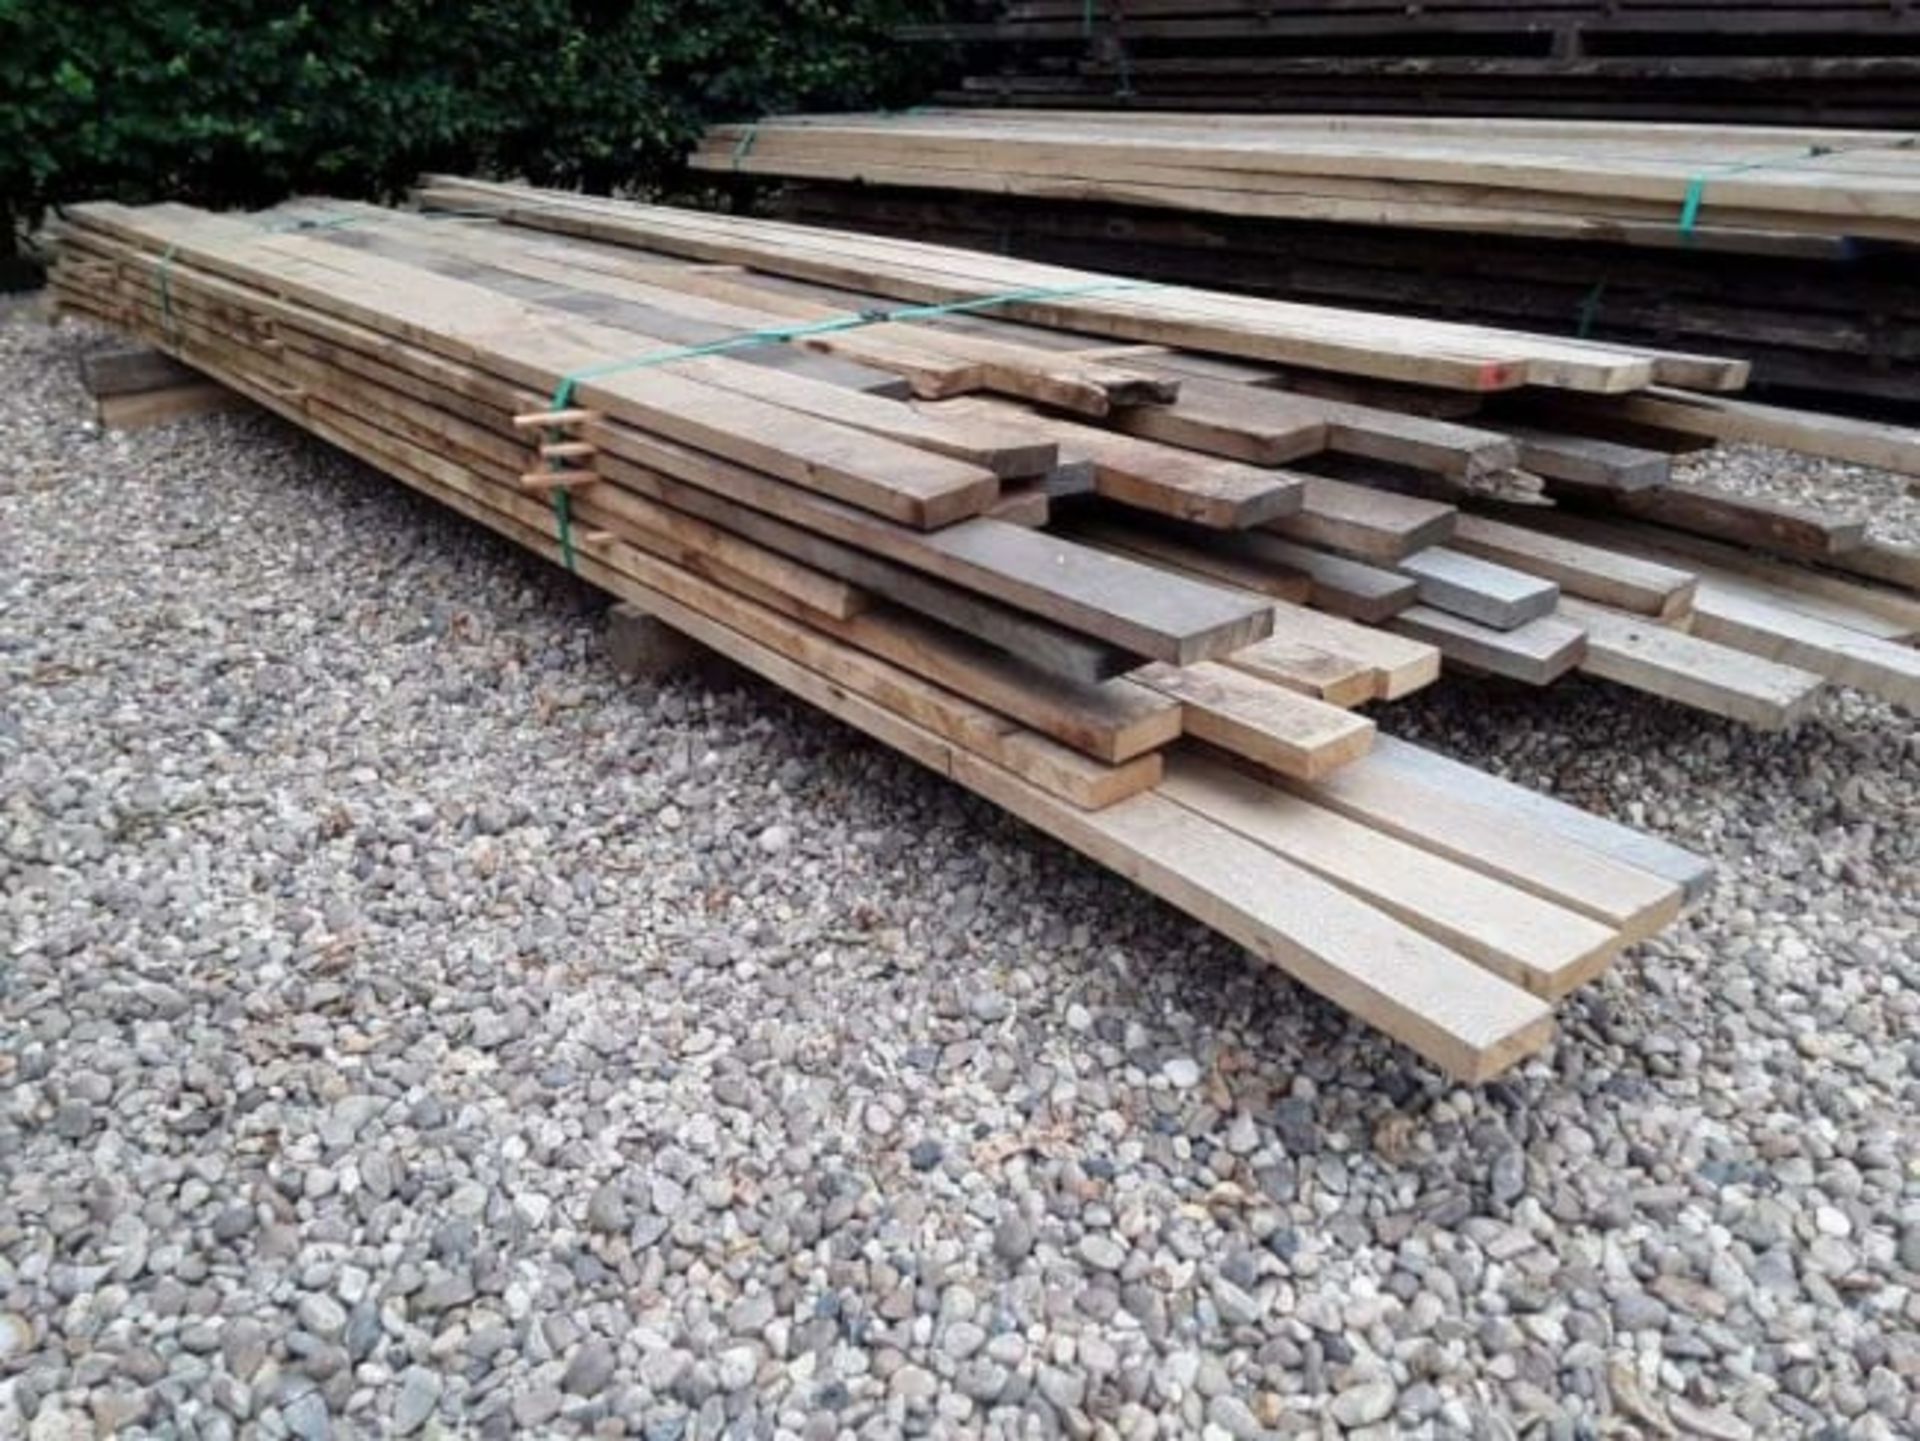 90 x Hardwood Air Dried Timber Sawn English Oak Boards / Rails - Image 2 of 3